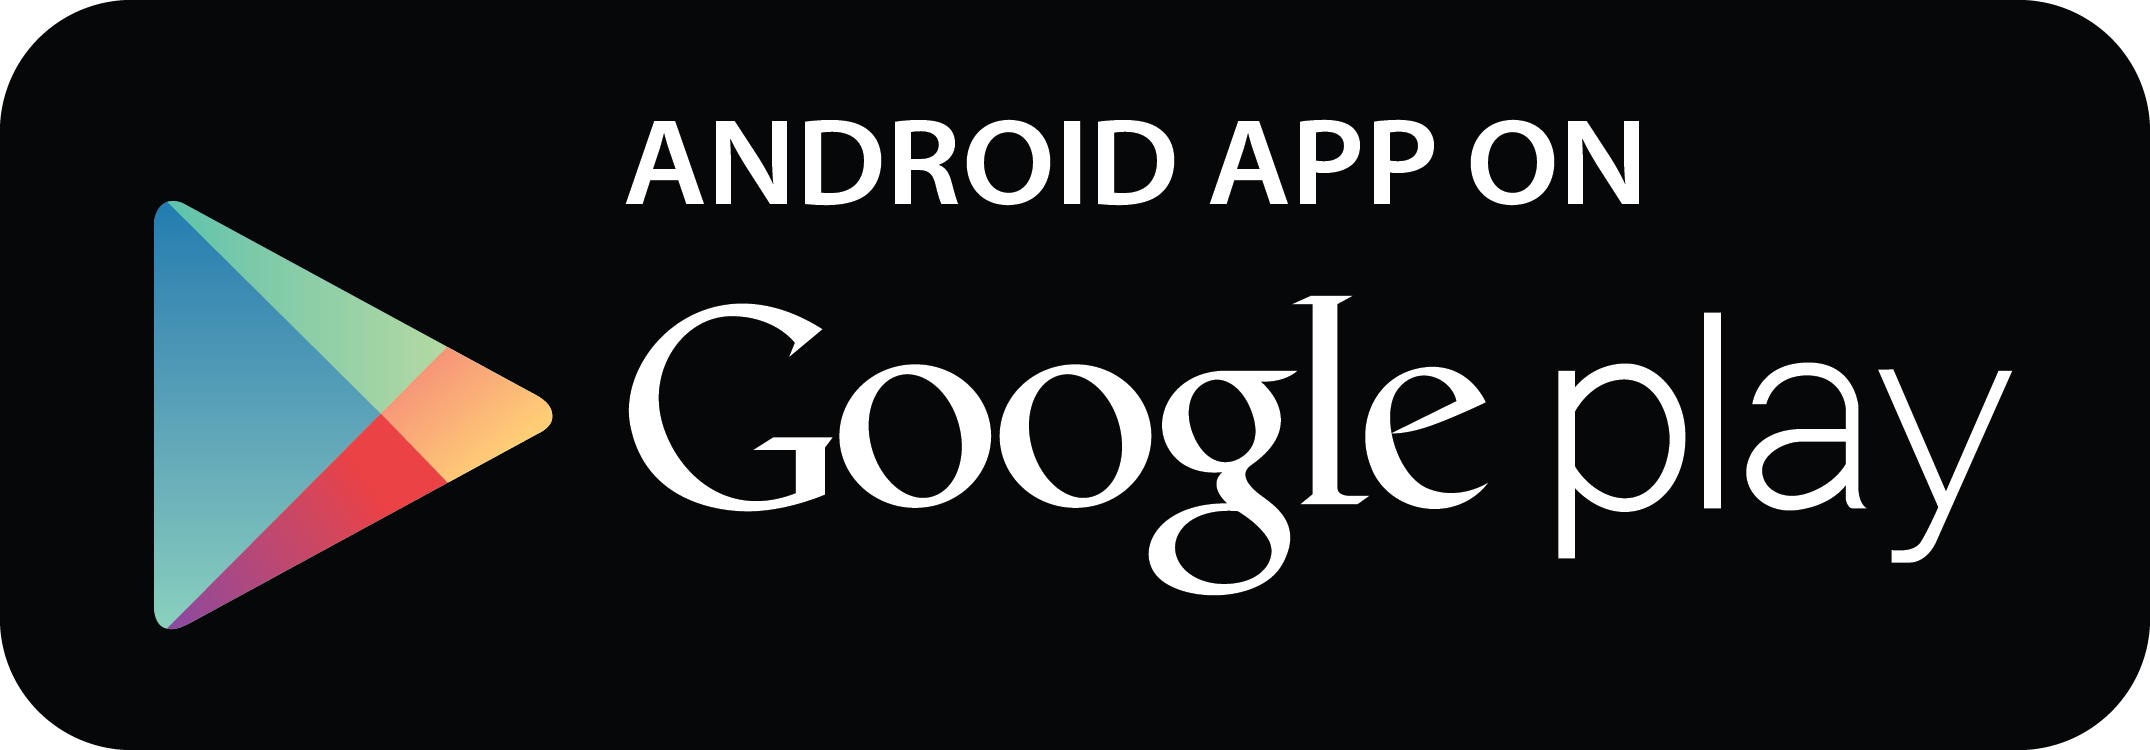 google app store logo